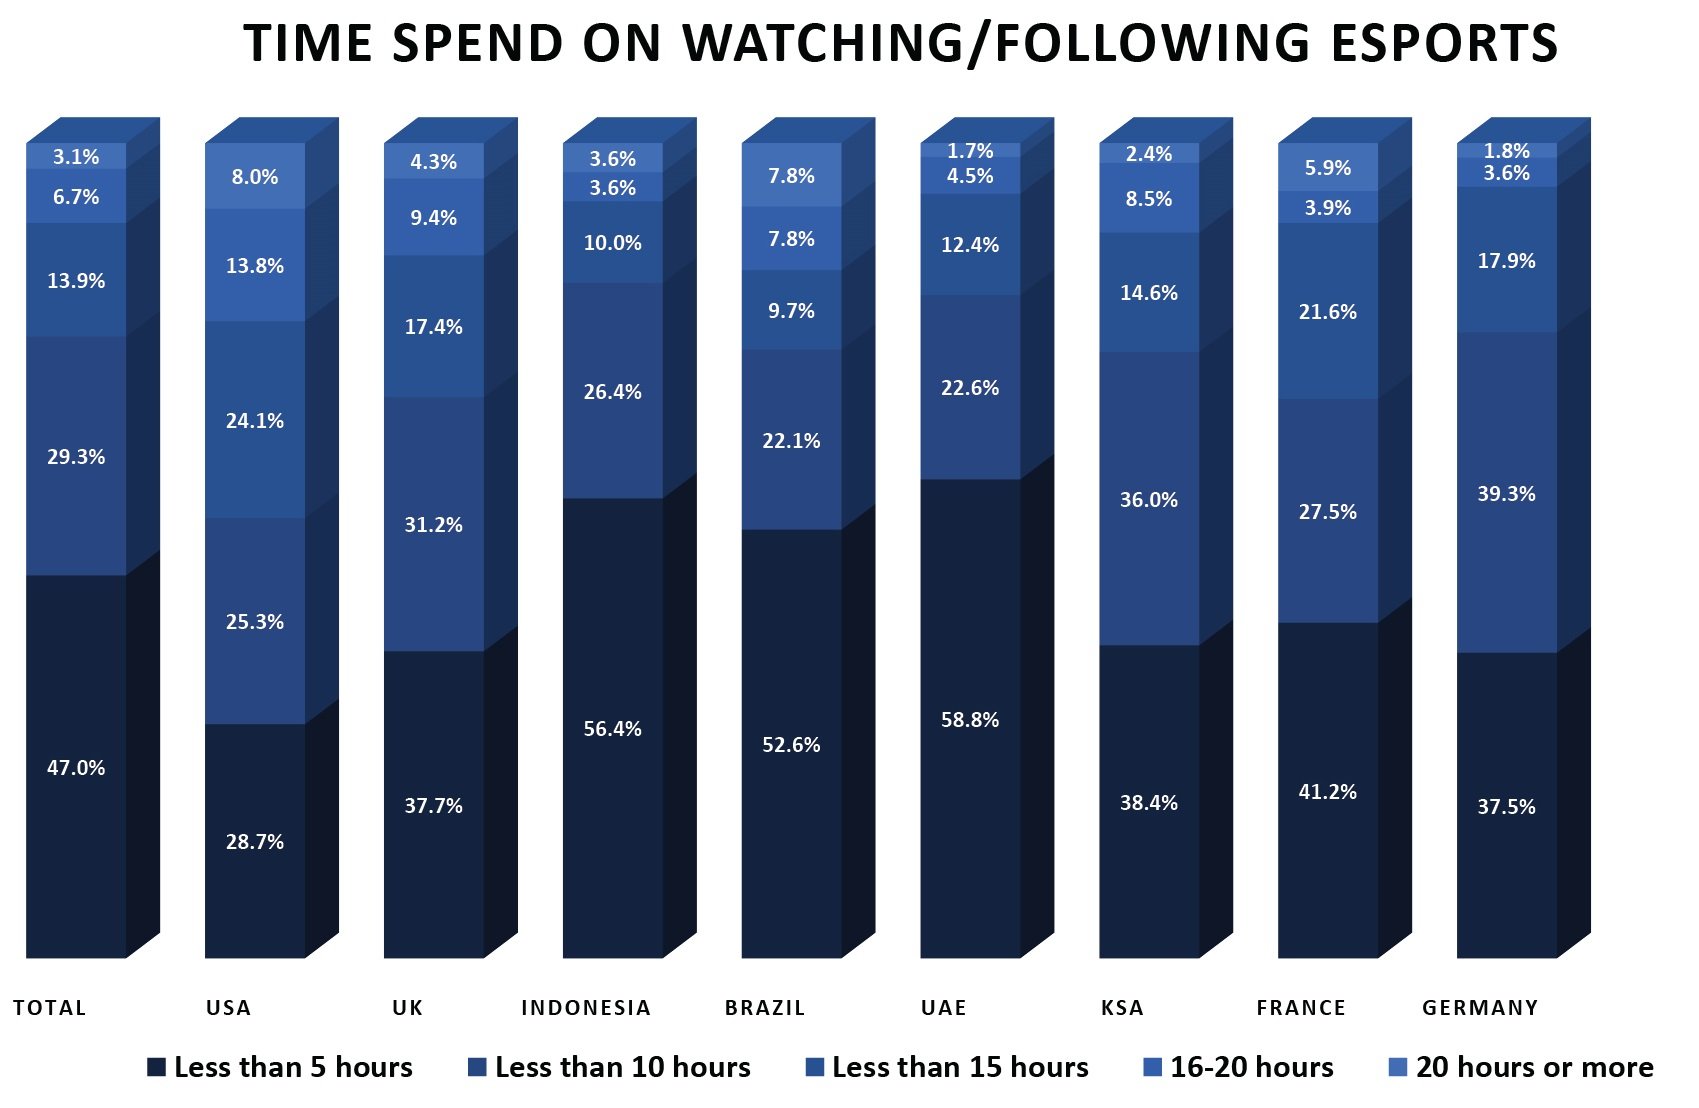 eSports viewership in developed markets 5